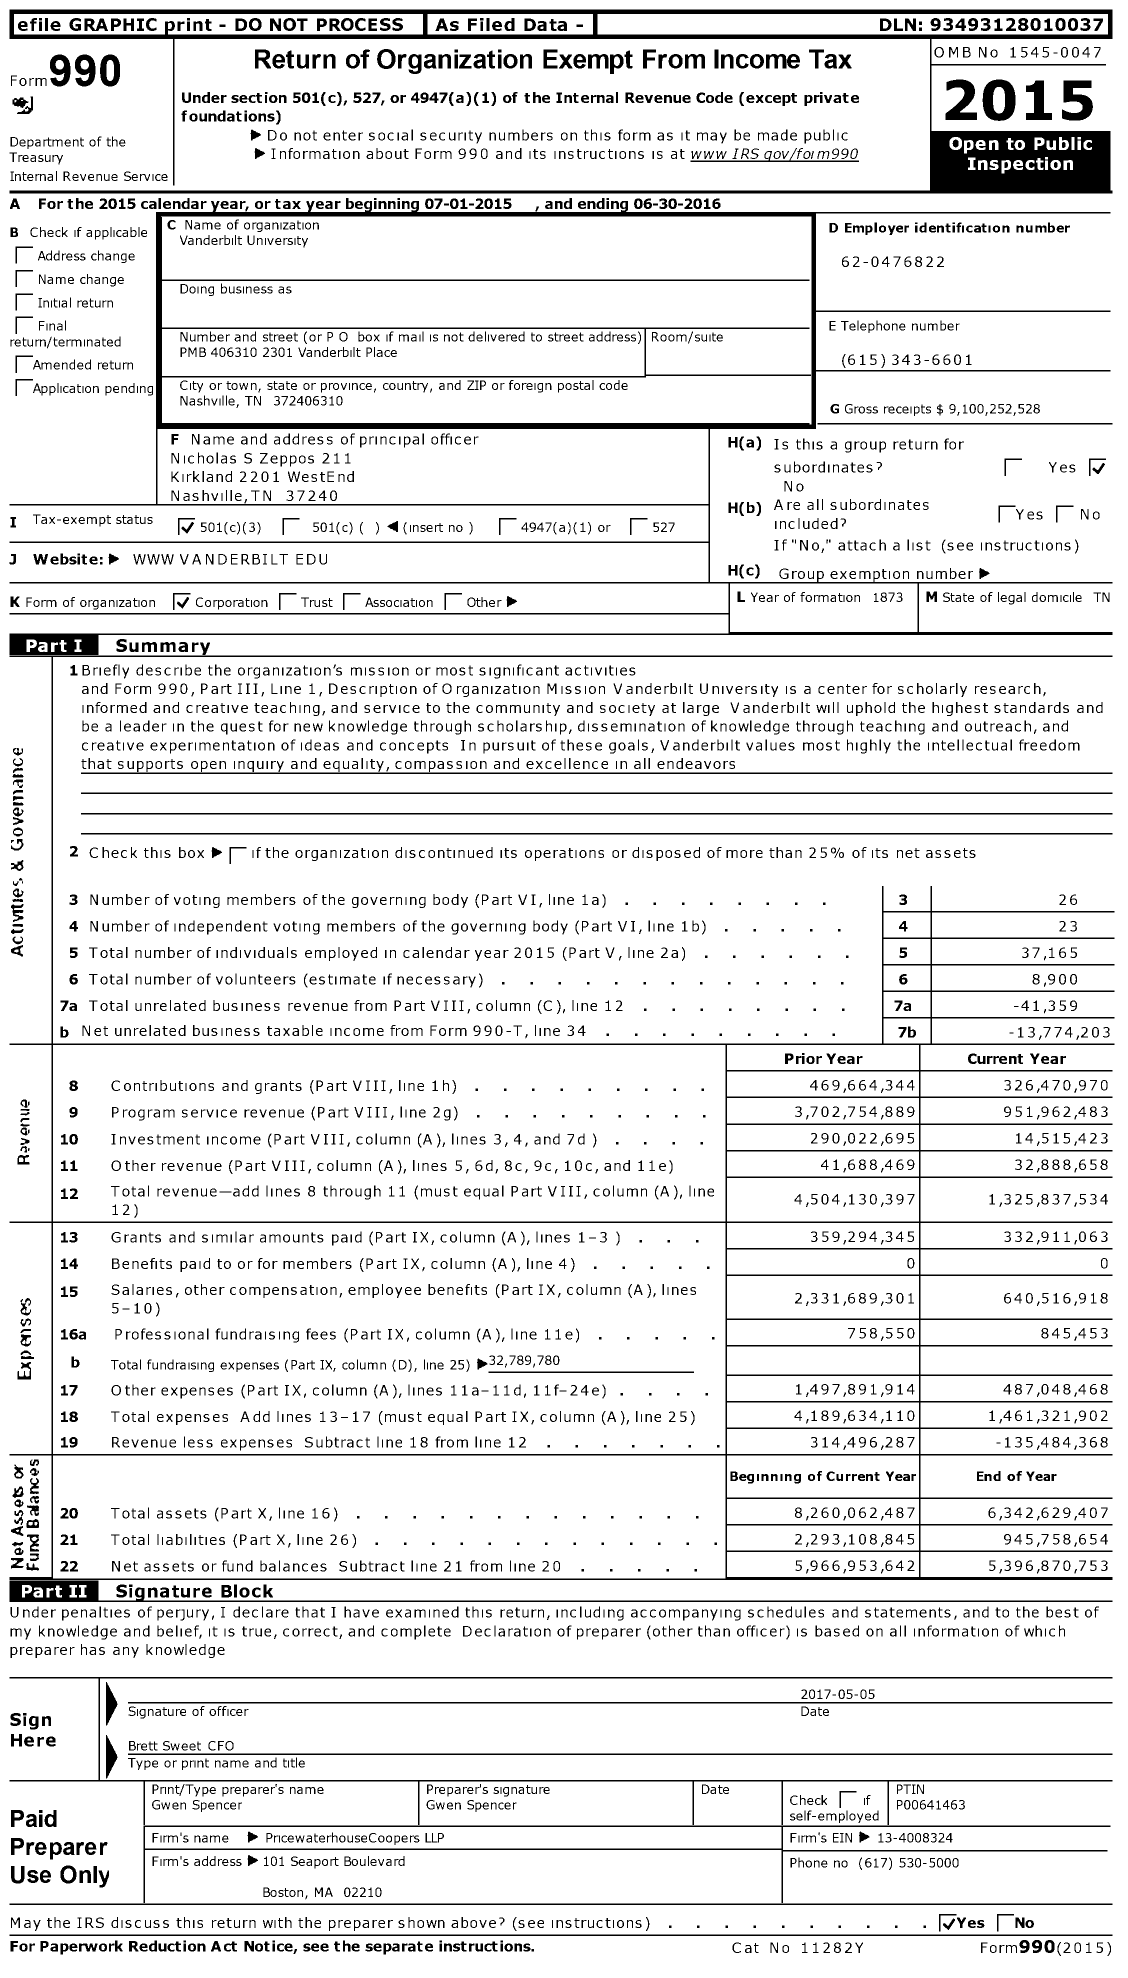 Image of first page of 2015 Form 990 for Vanderbilt University